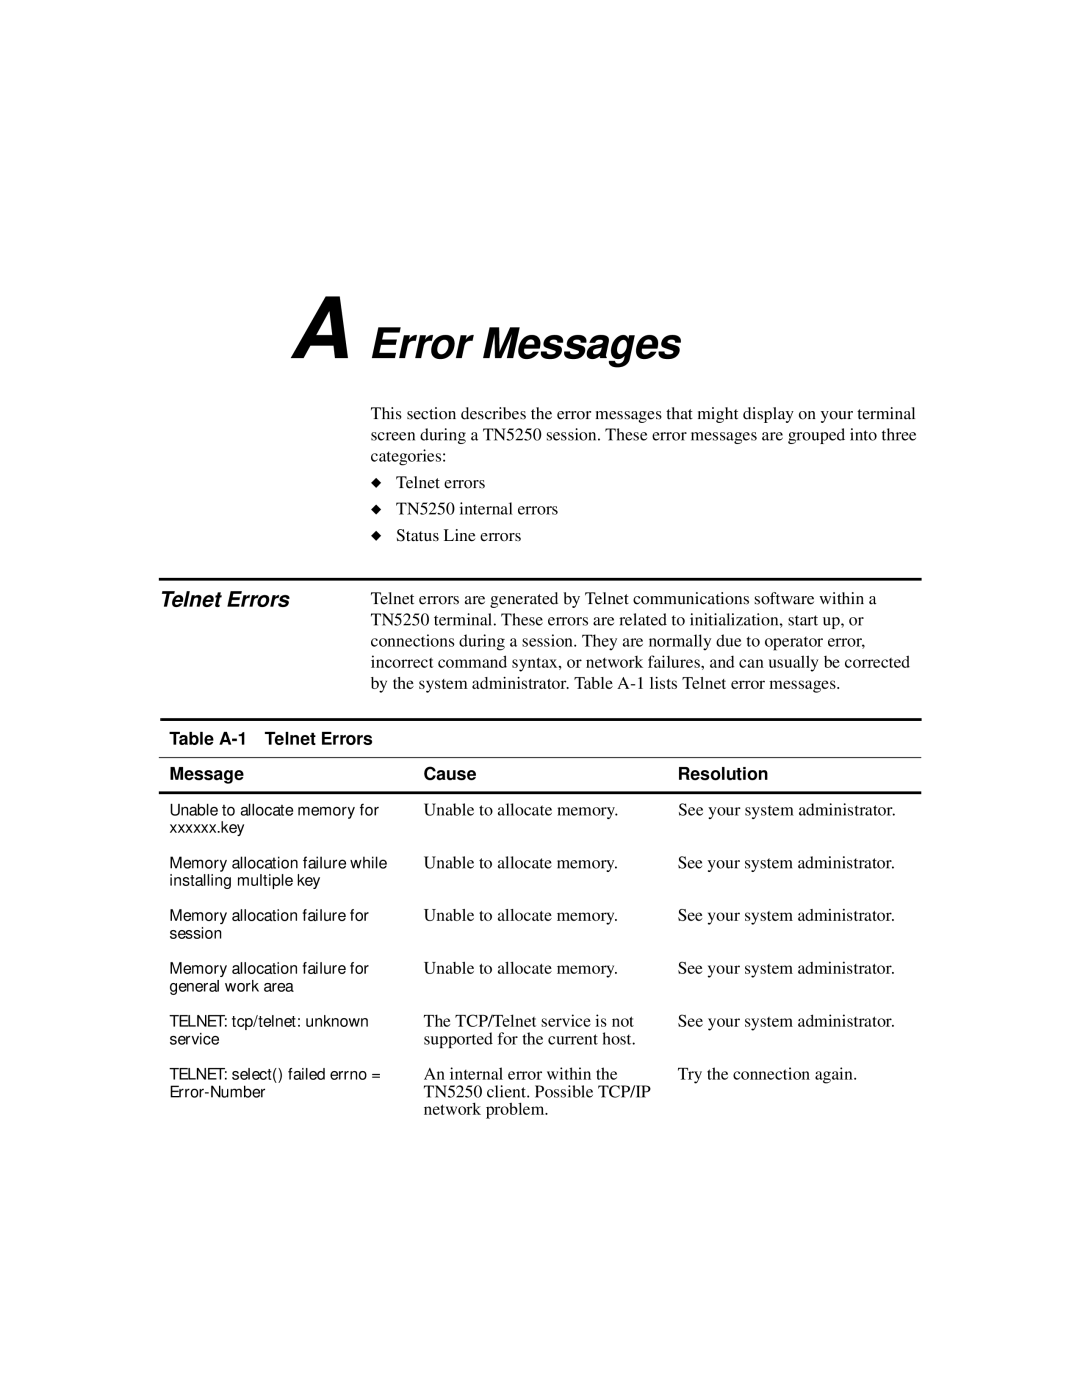 IBM TN5250 manual A Error Messages, Telnet Errors 